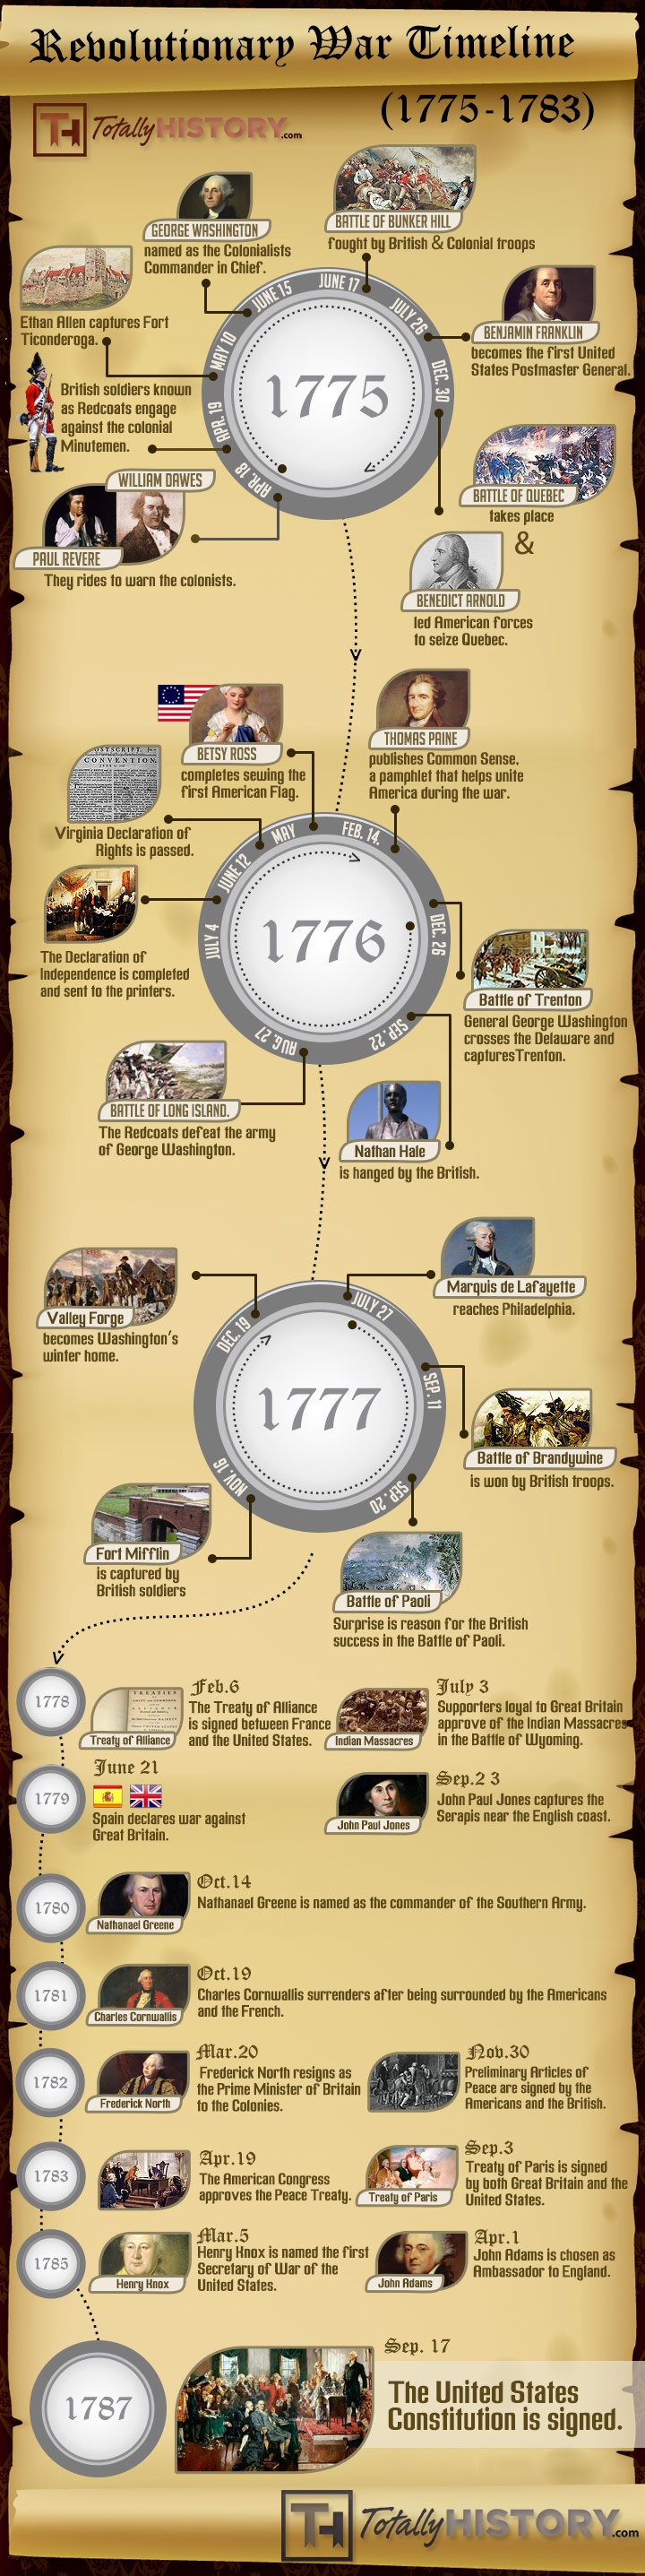 revolutionary-war-timeline-1775-1783-common-sense-evaluation